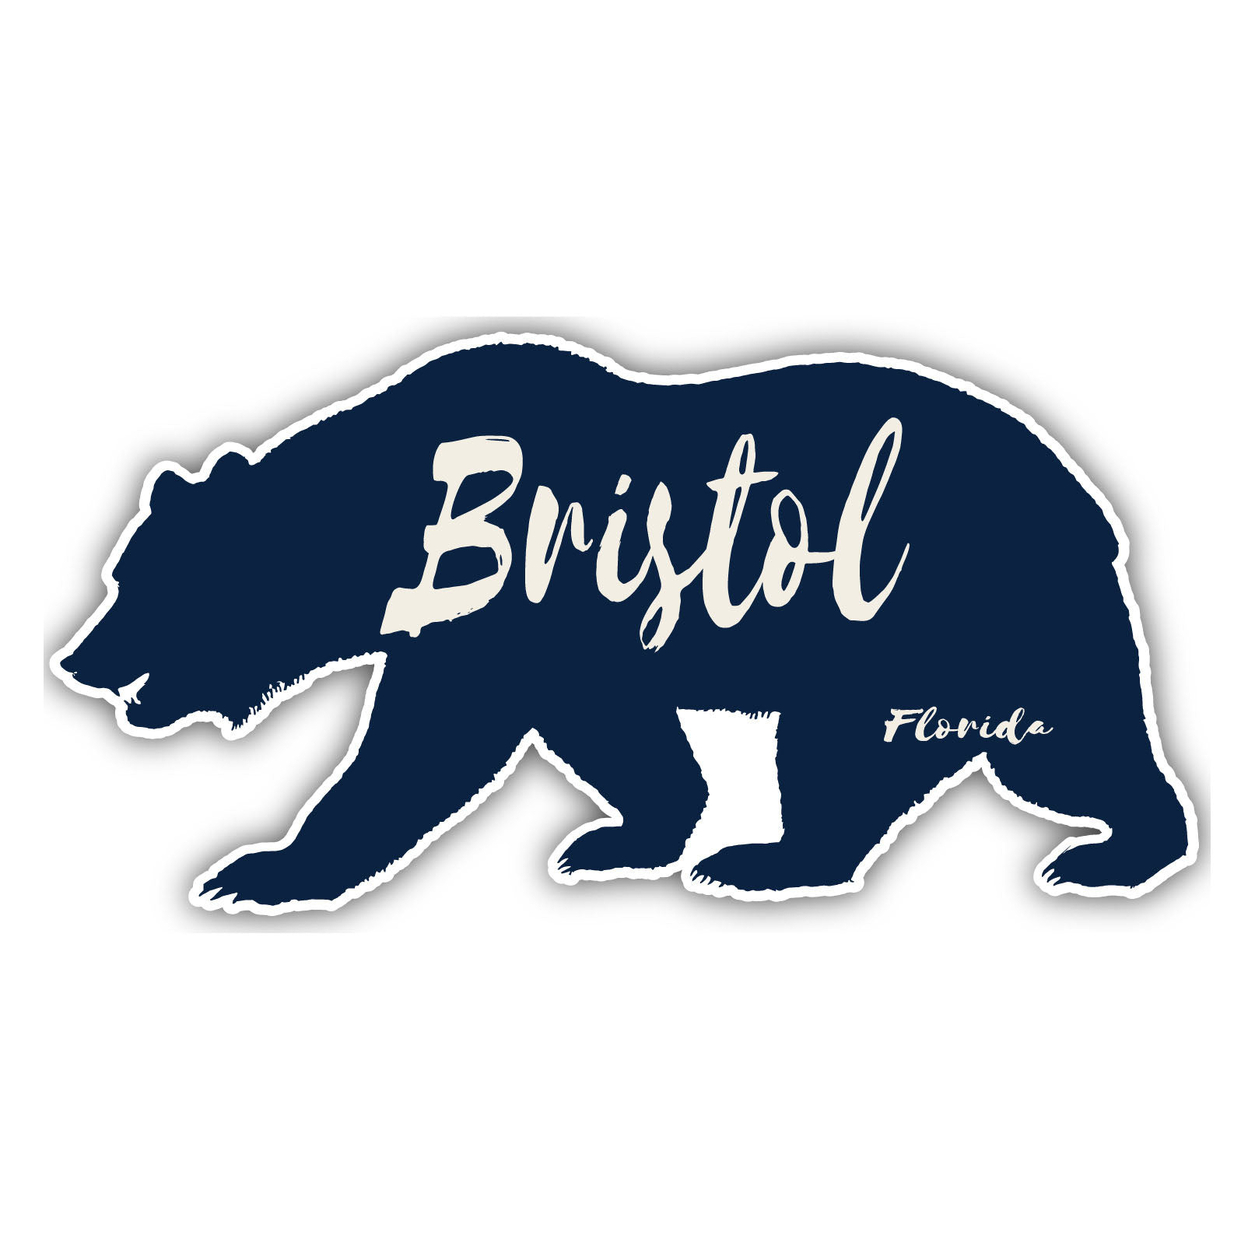 Bristol Florida Souvenir Decorative Stickers (Choose Theme And Size) - 4-Pack, 6-Inch, Bear